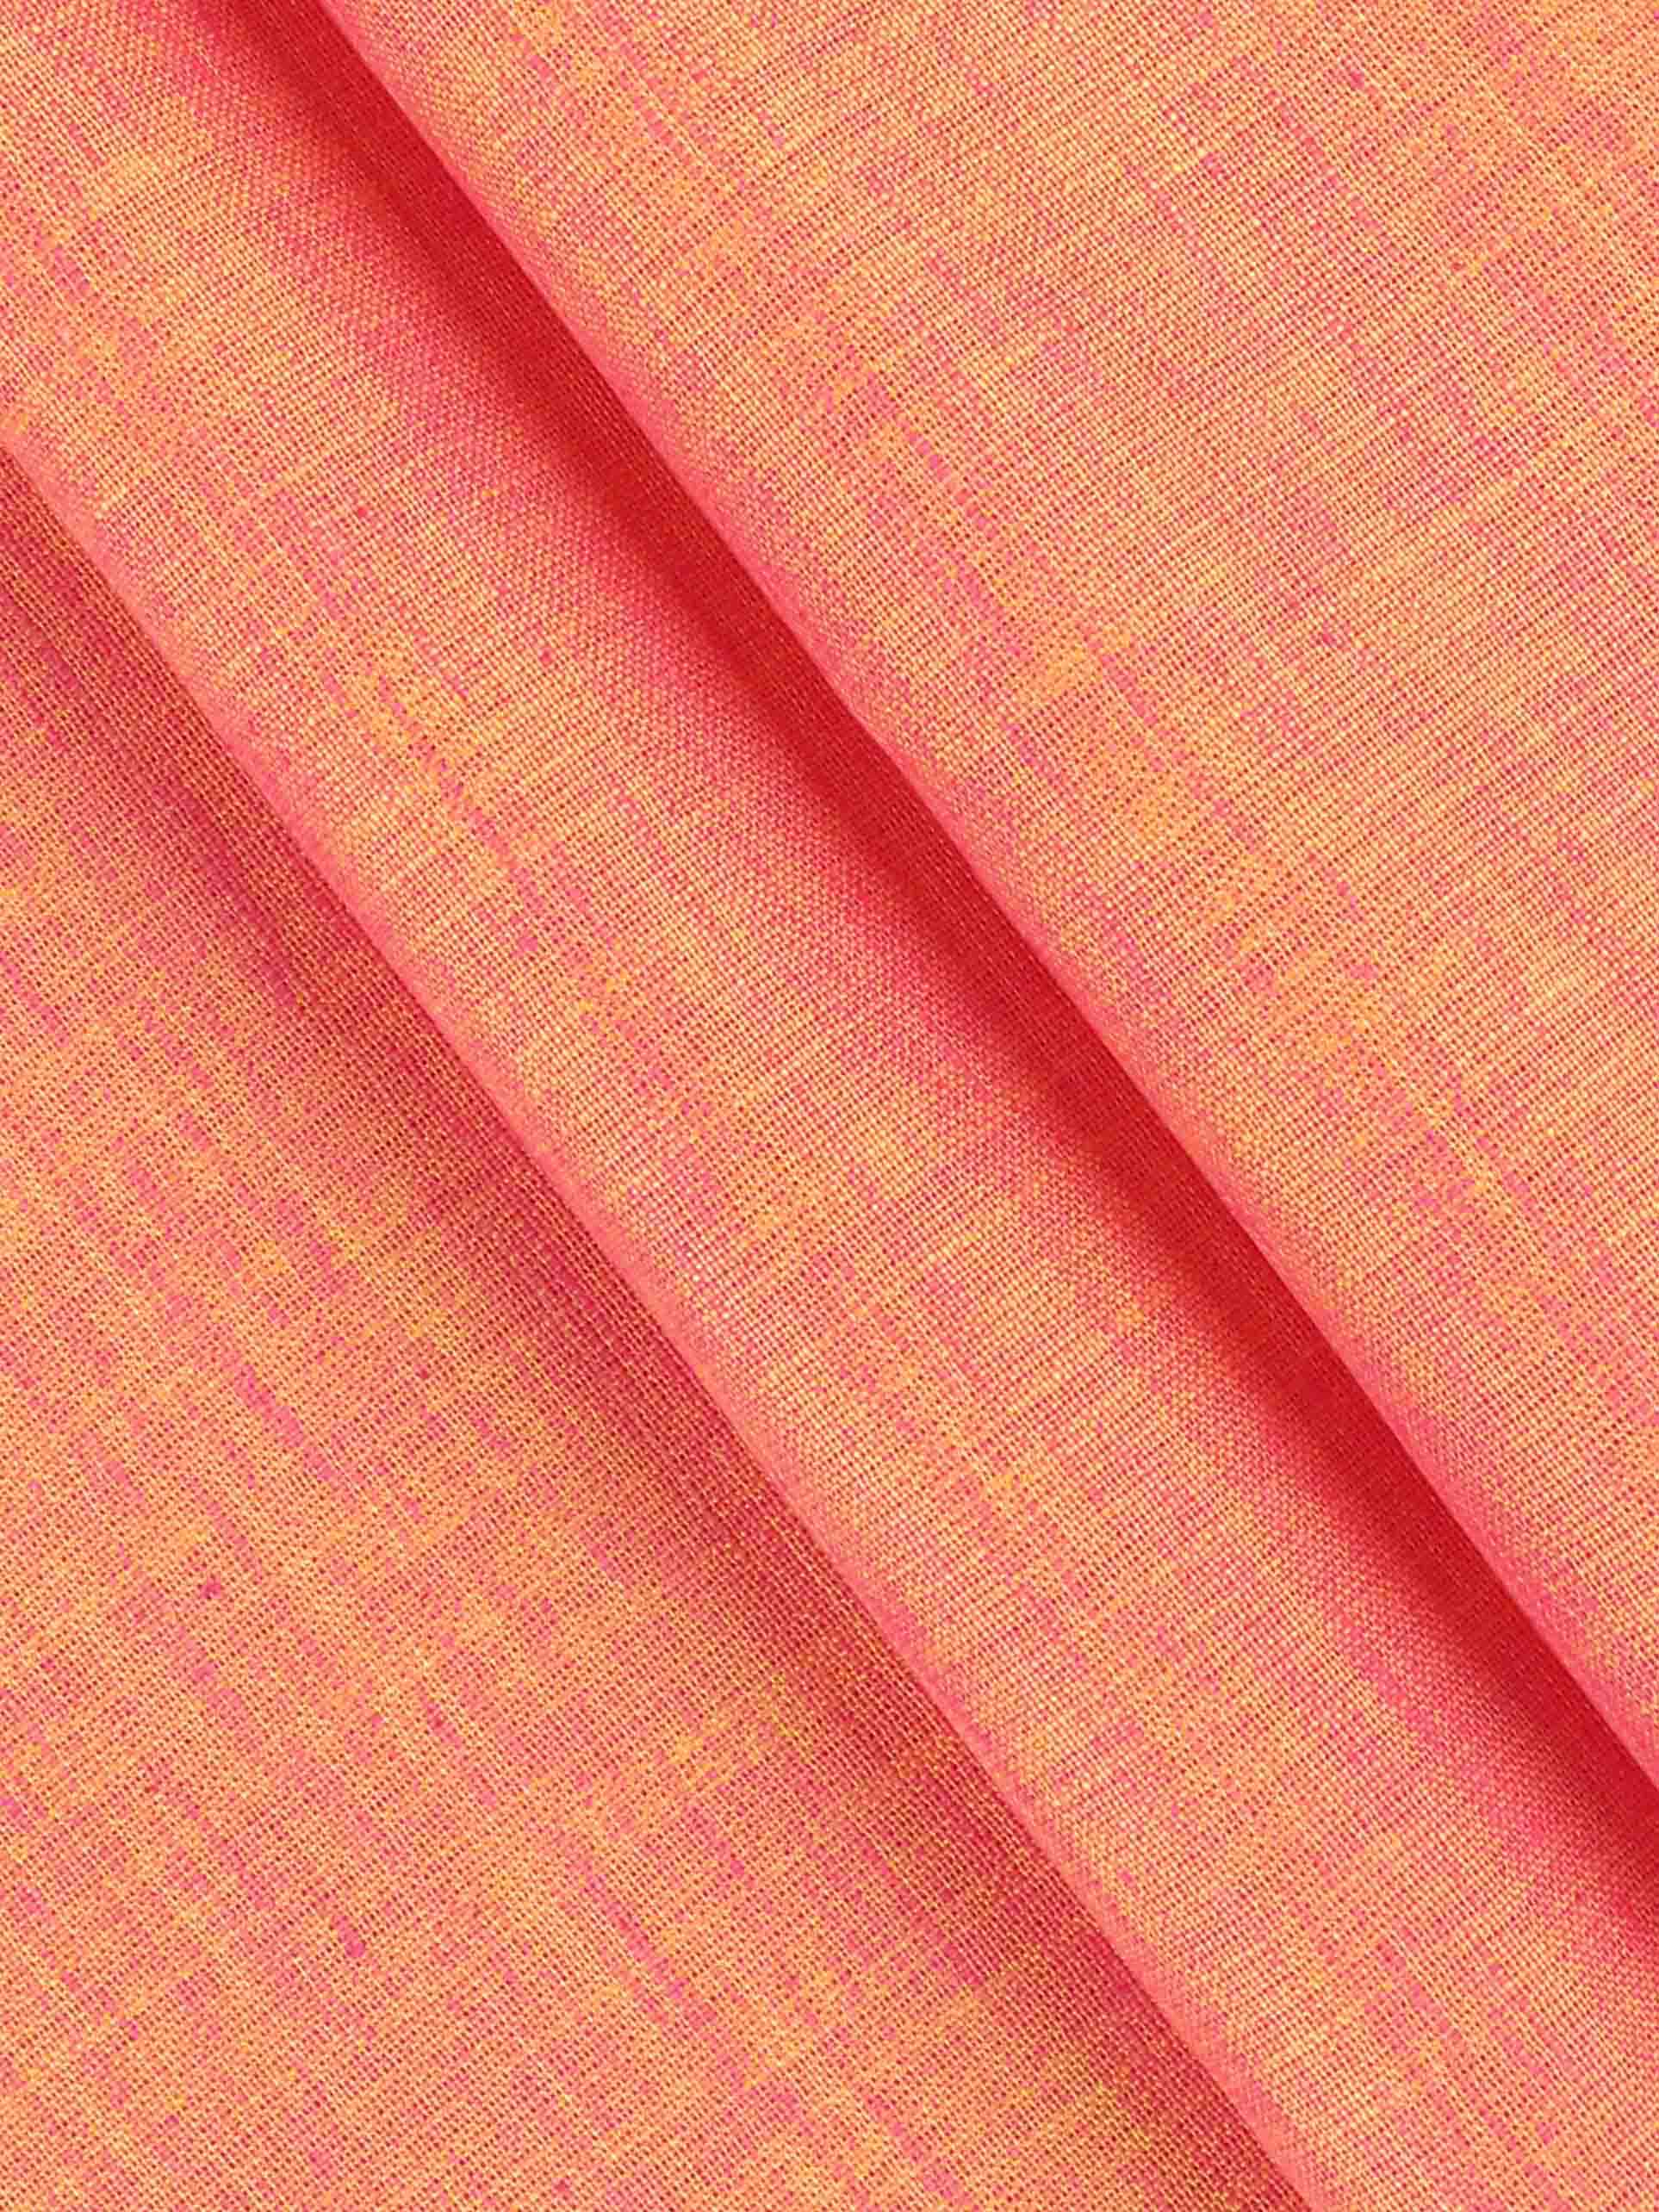 Cotton Blend Orange Colour Kurtha Fabric Lampus - CAPC1160-15